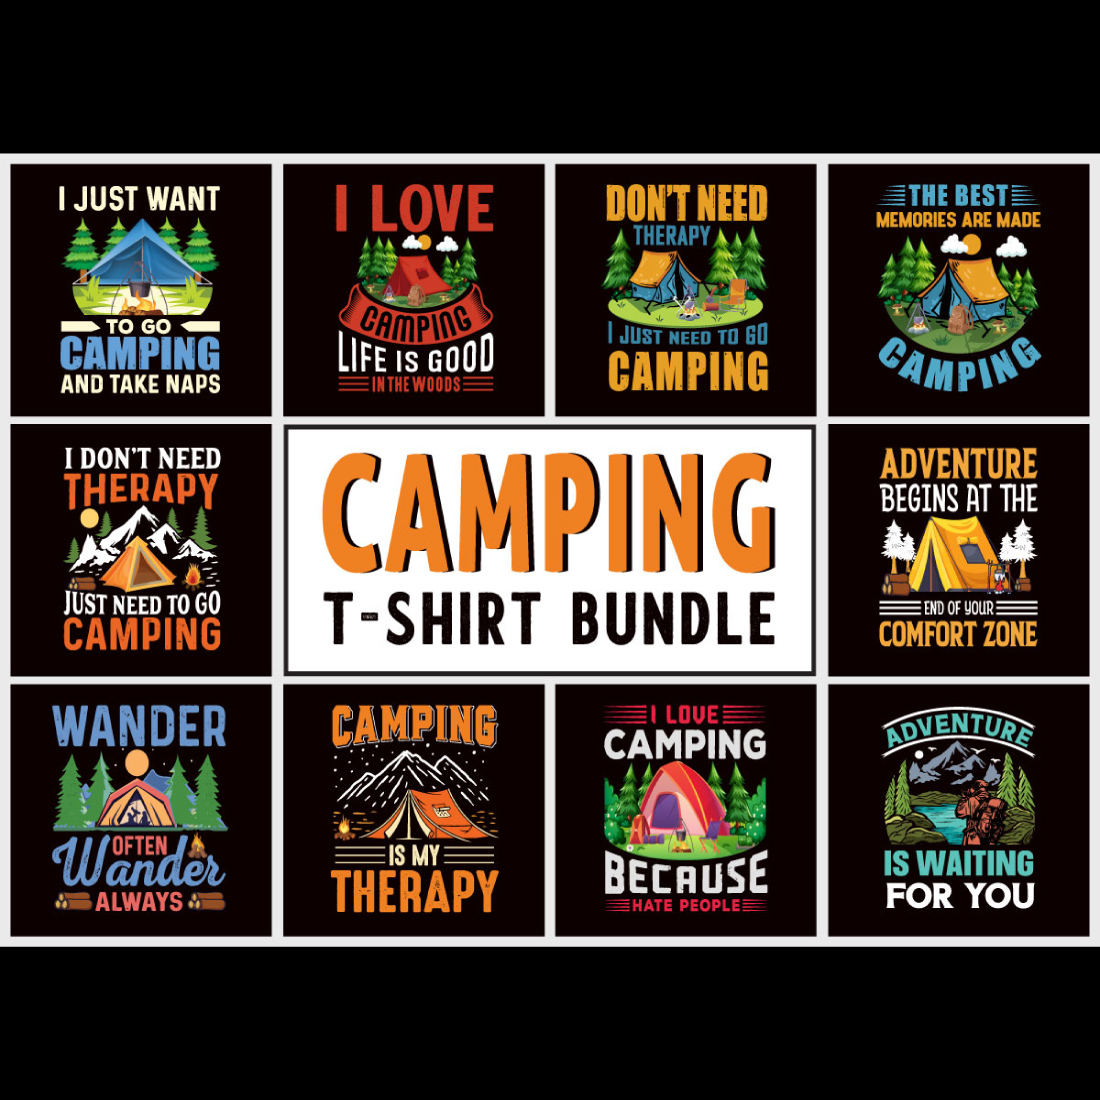 Camping T-Shirt Design Bundle cover image.